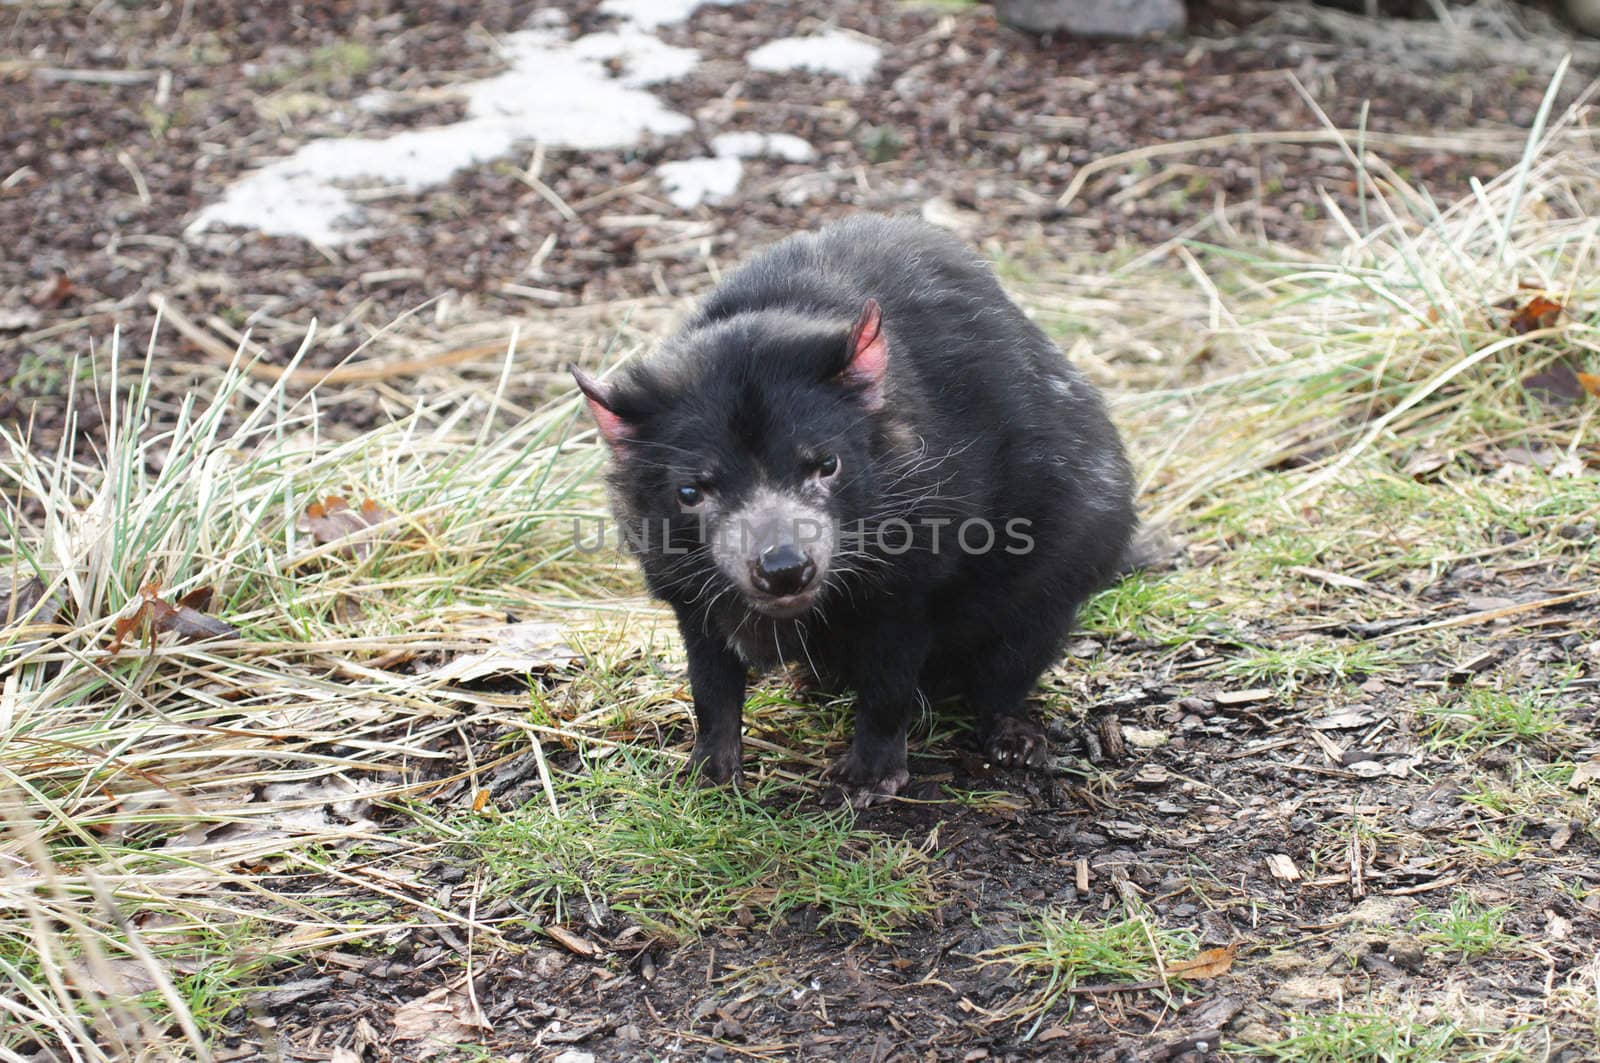 Rare Tasmanian devil (Sarcophilus harrisii) by AlessandroZocc